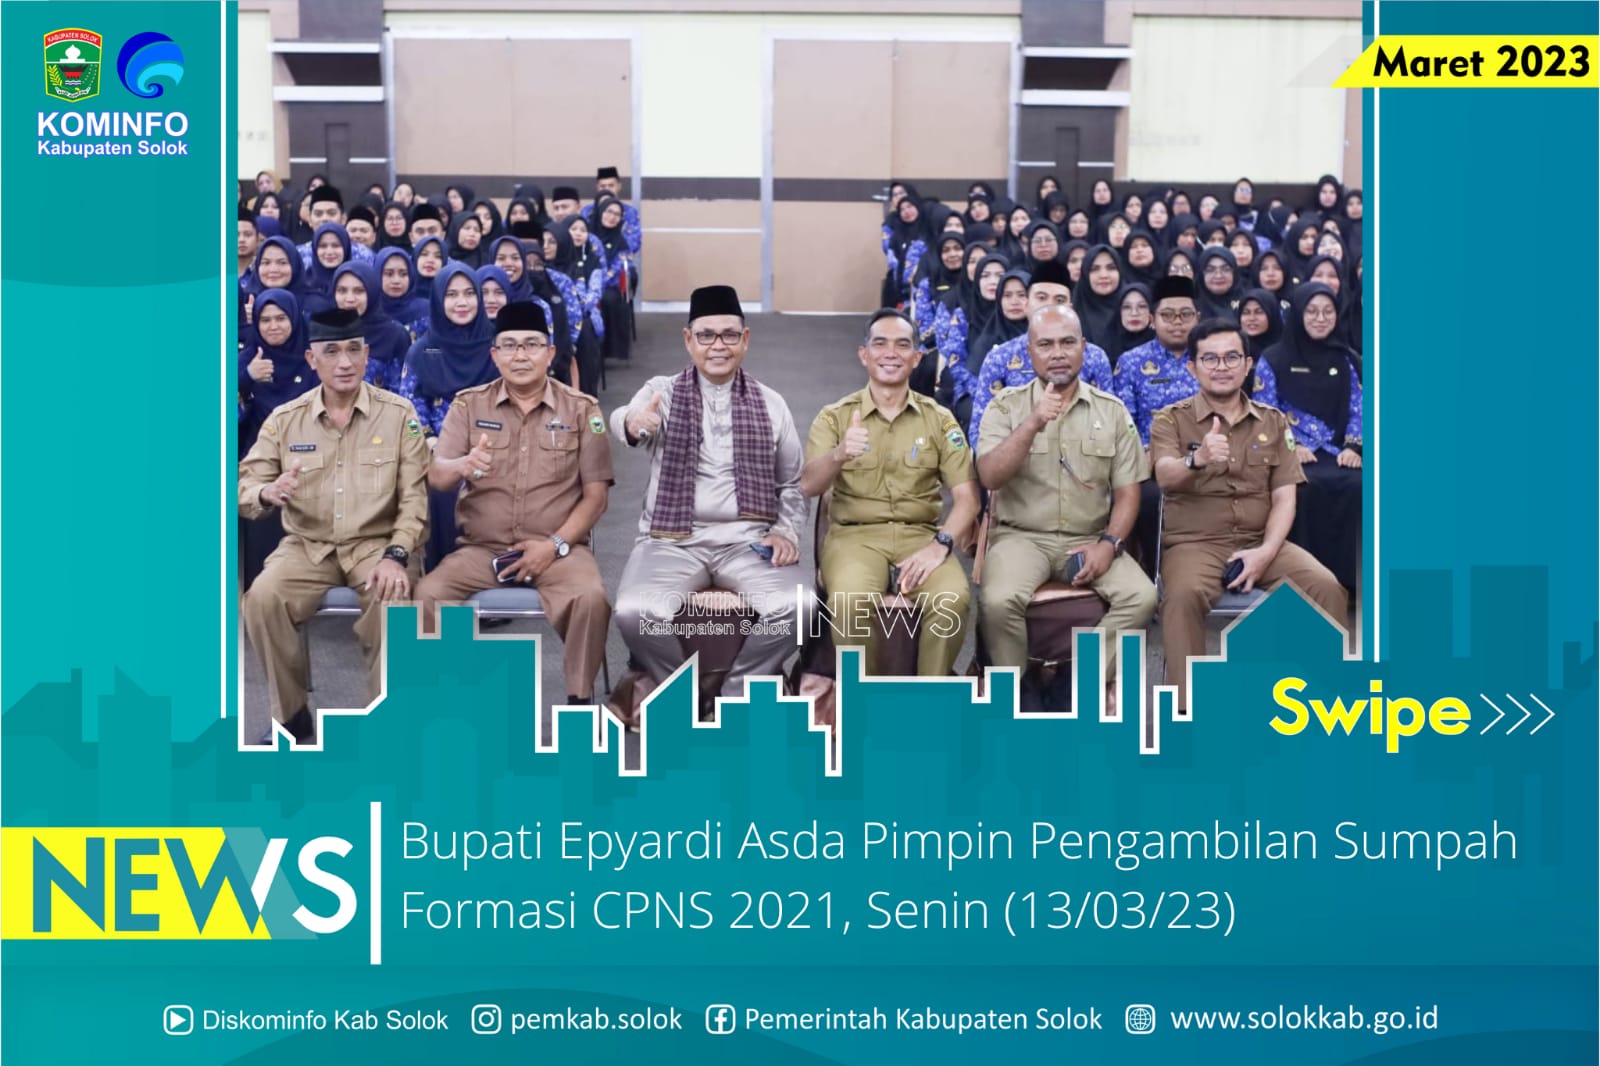 Bupati Solok, Epyardi Asda Pimpin Pengambilan sumpah serta janji pengangkatan pertama CPNS Formasi 2021